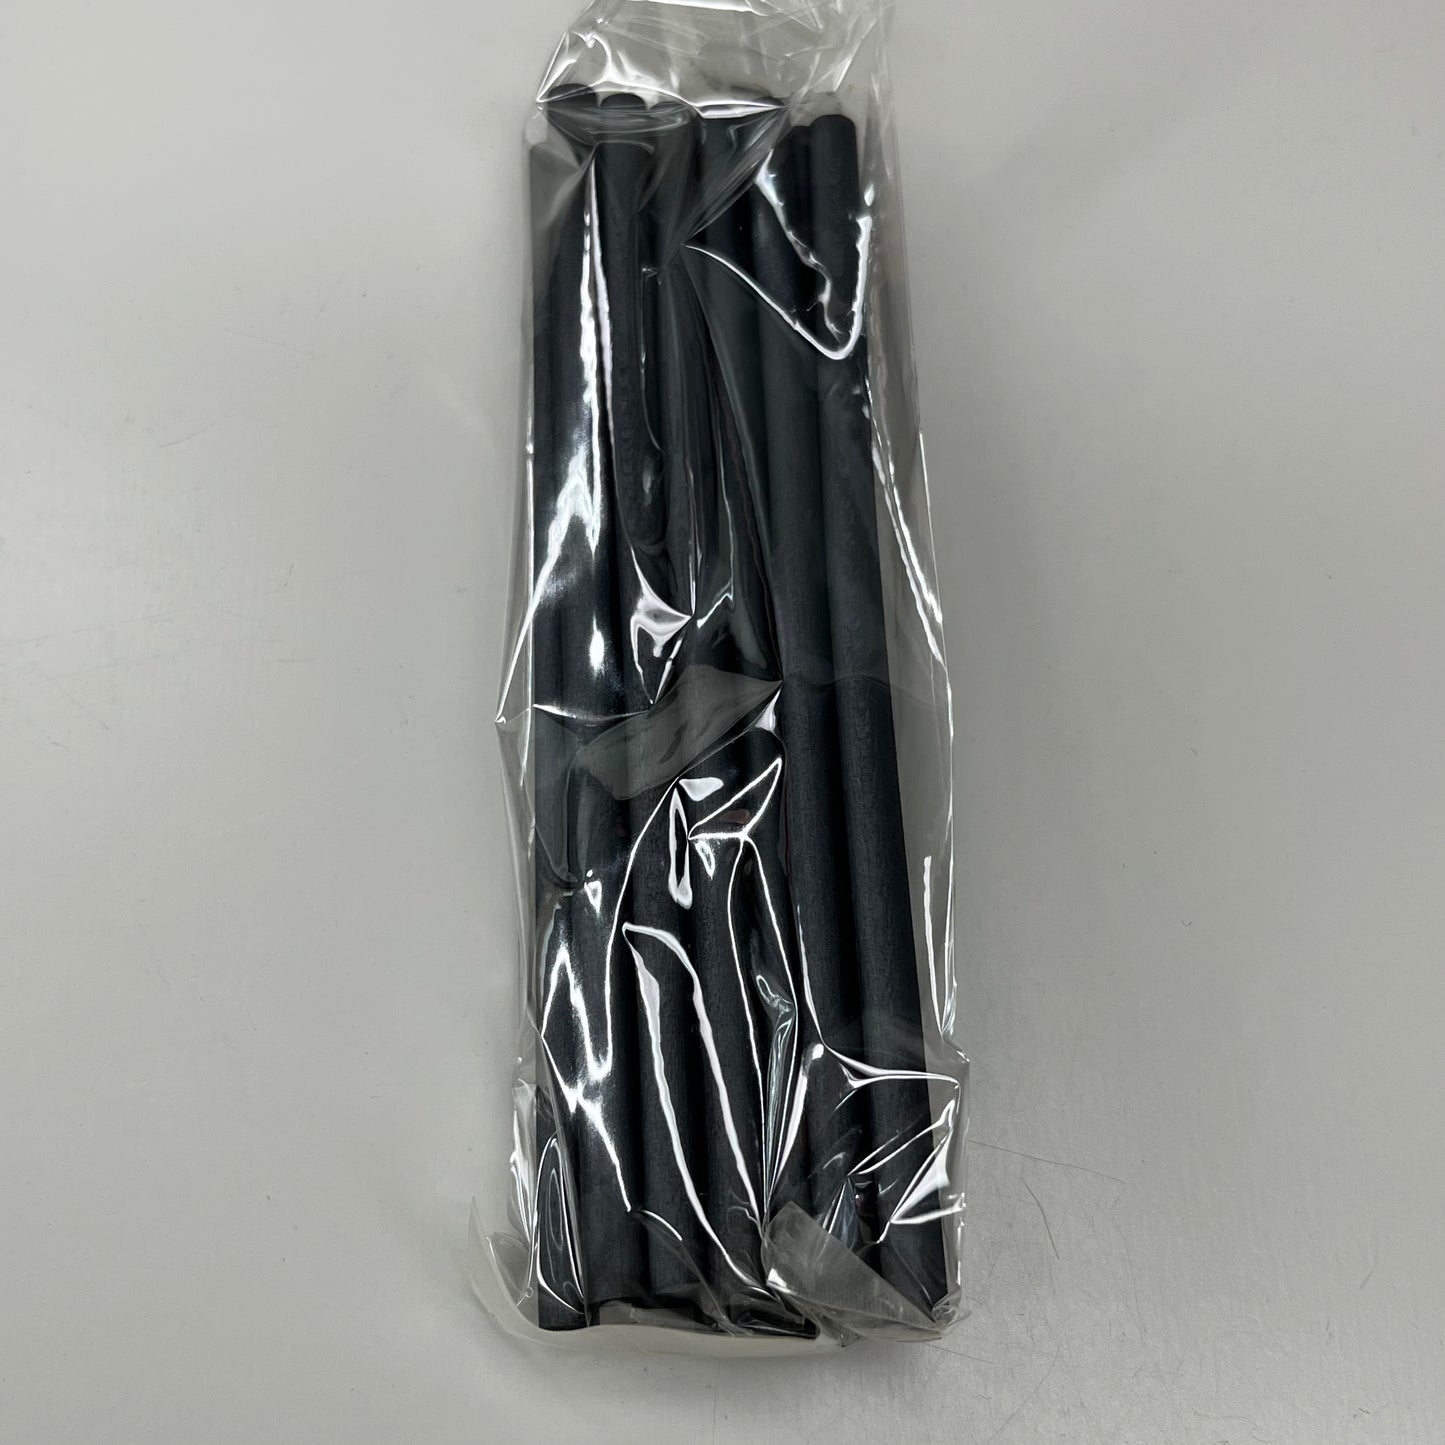 GRUMBACHER 3-PACKS of 12! (36 charcoal sticks total) Tender Charcoal V4112 (New)